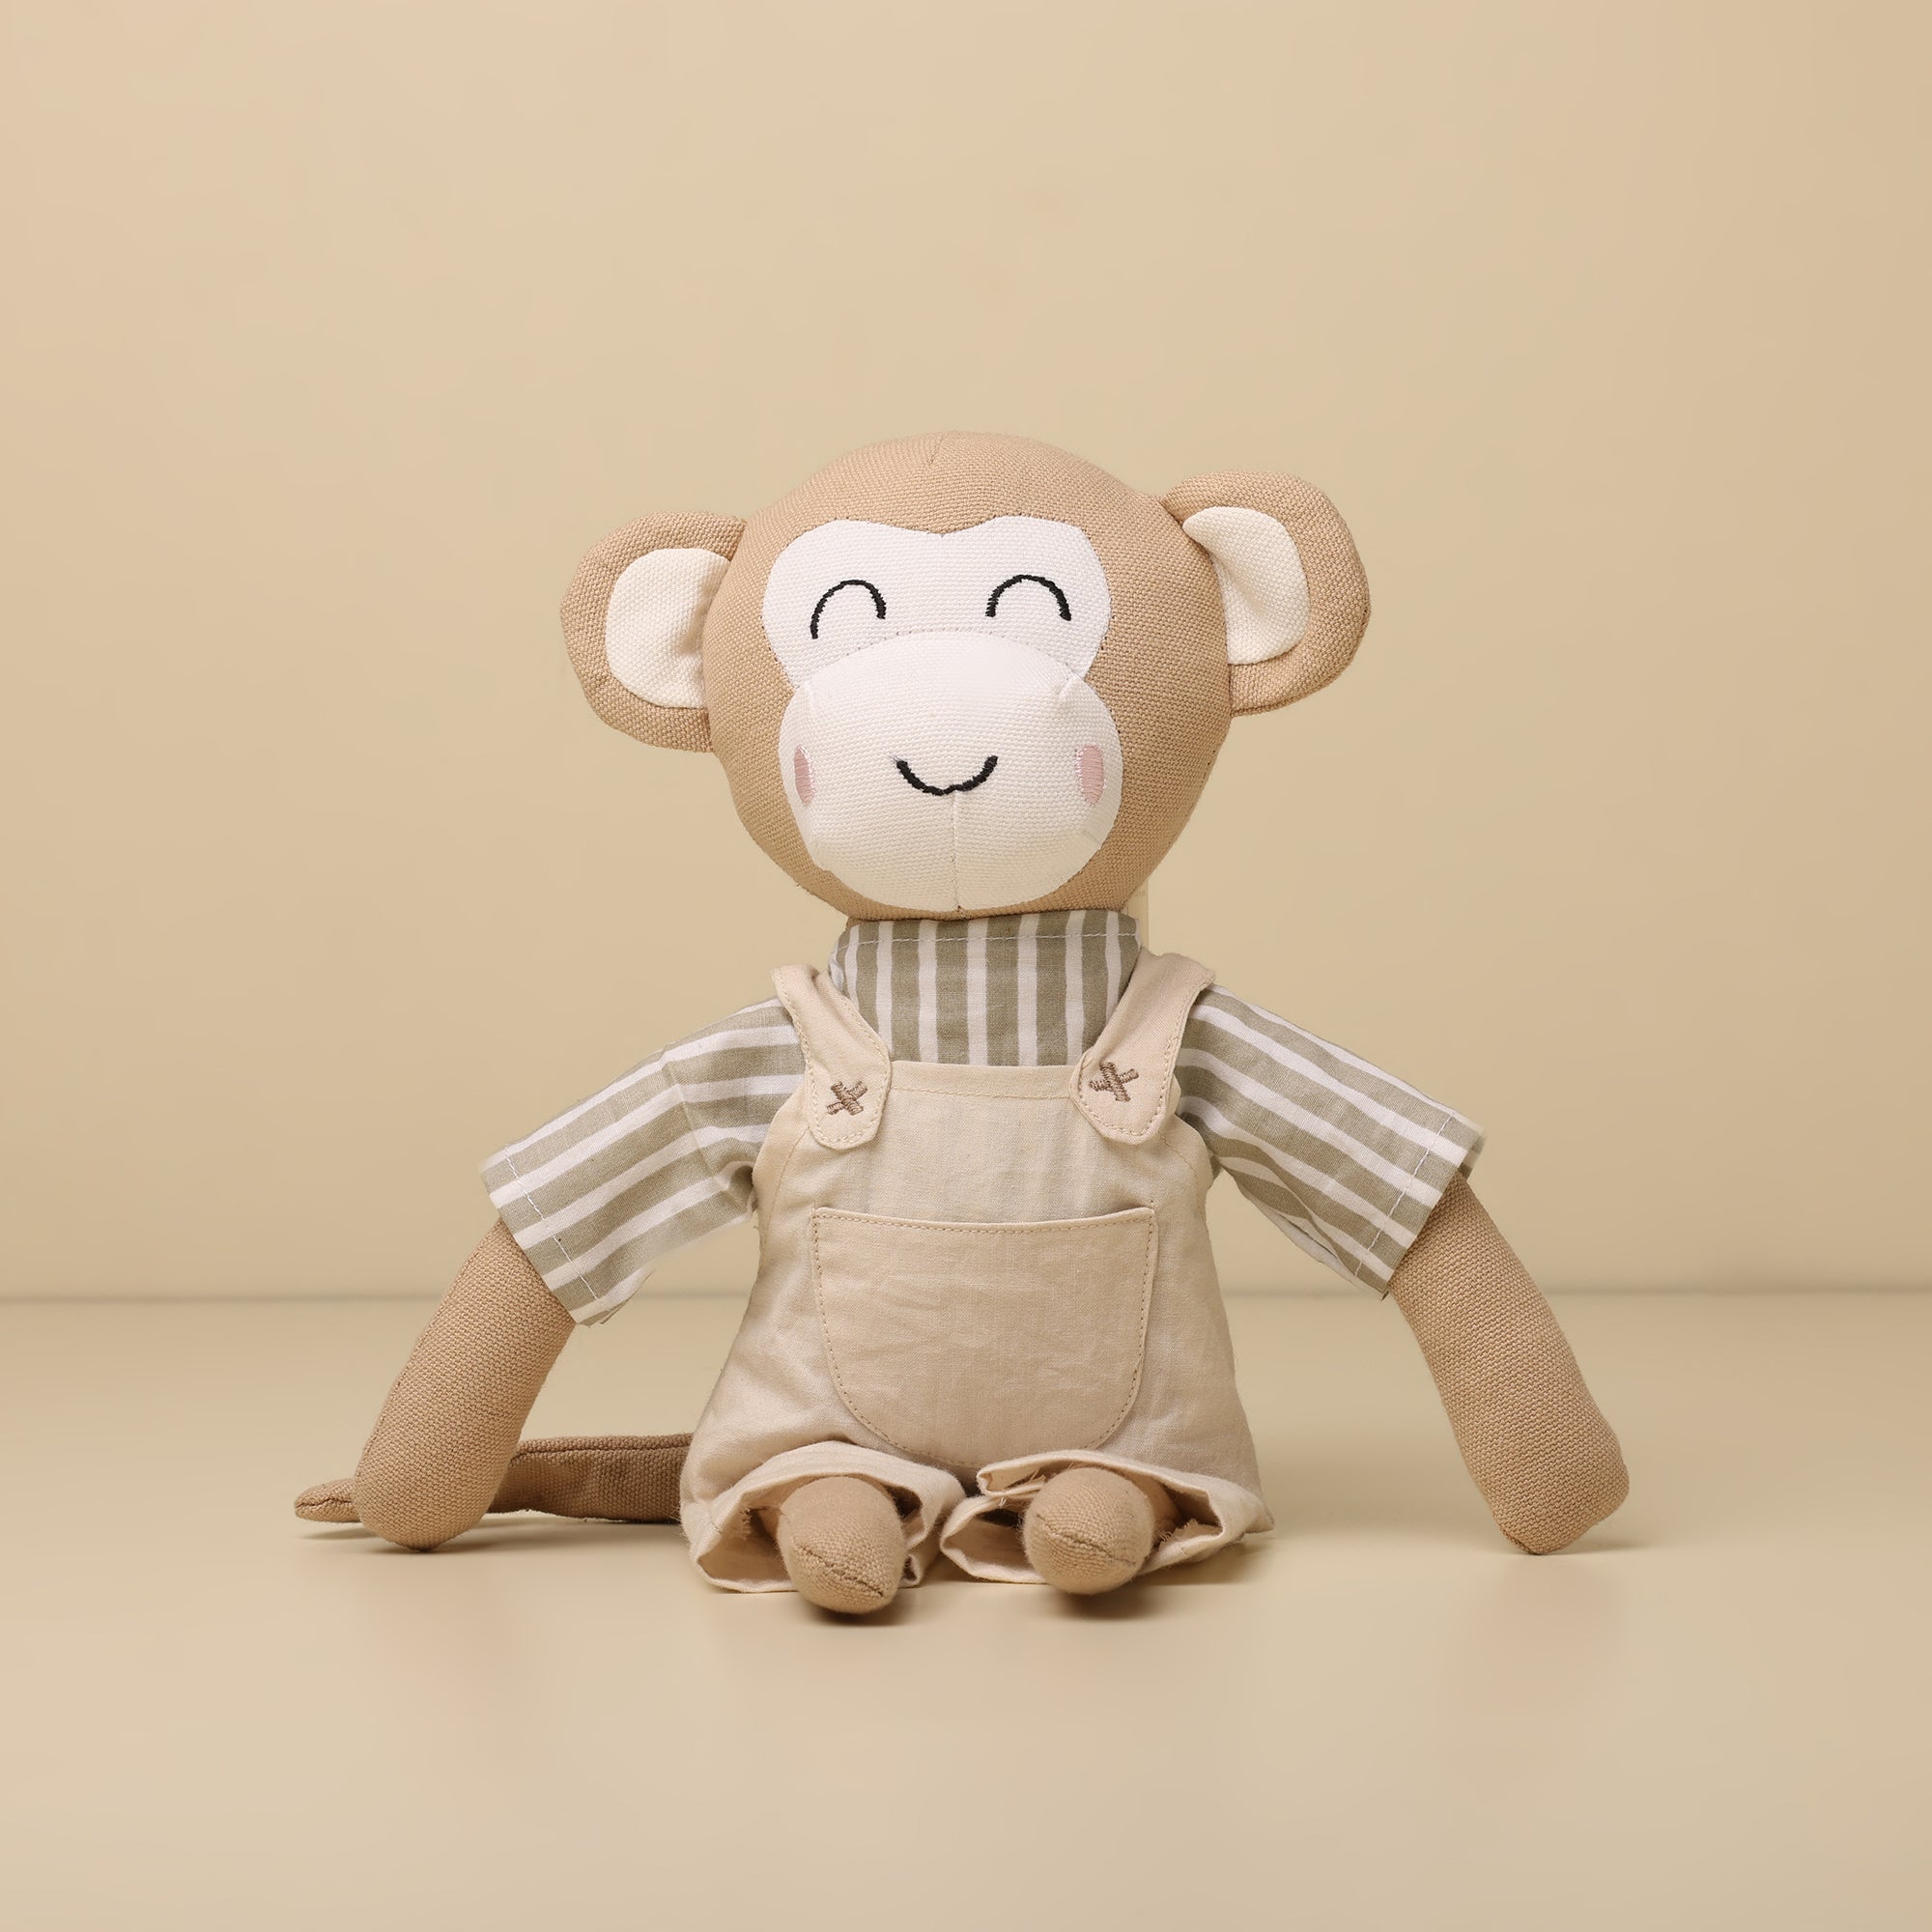 Cuddly Buddies Mr. Monkey Soft Toy